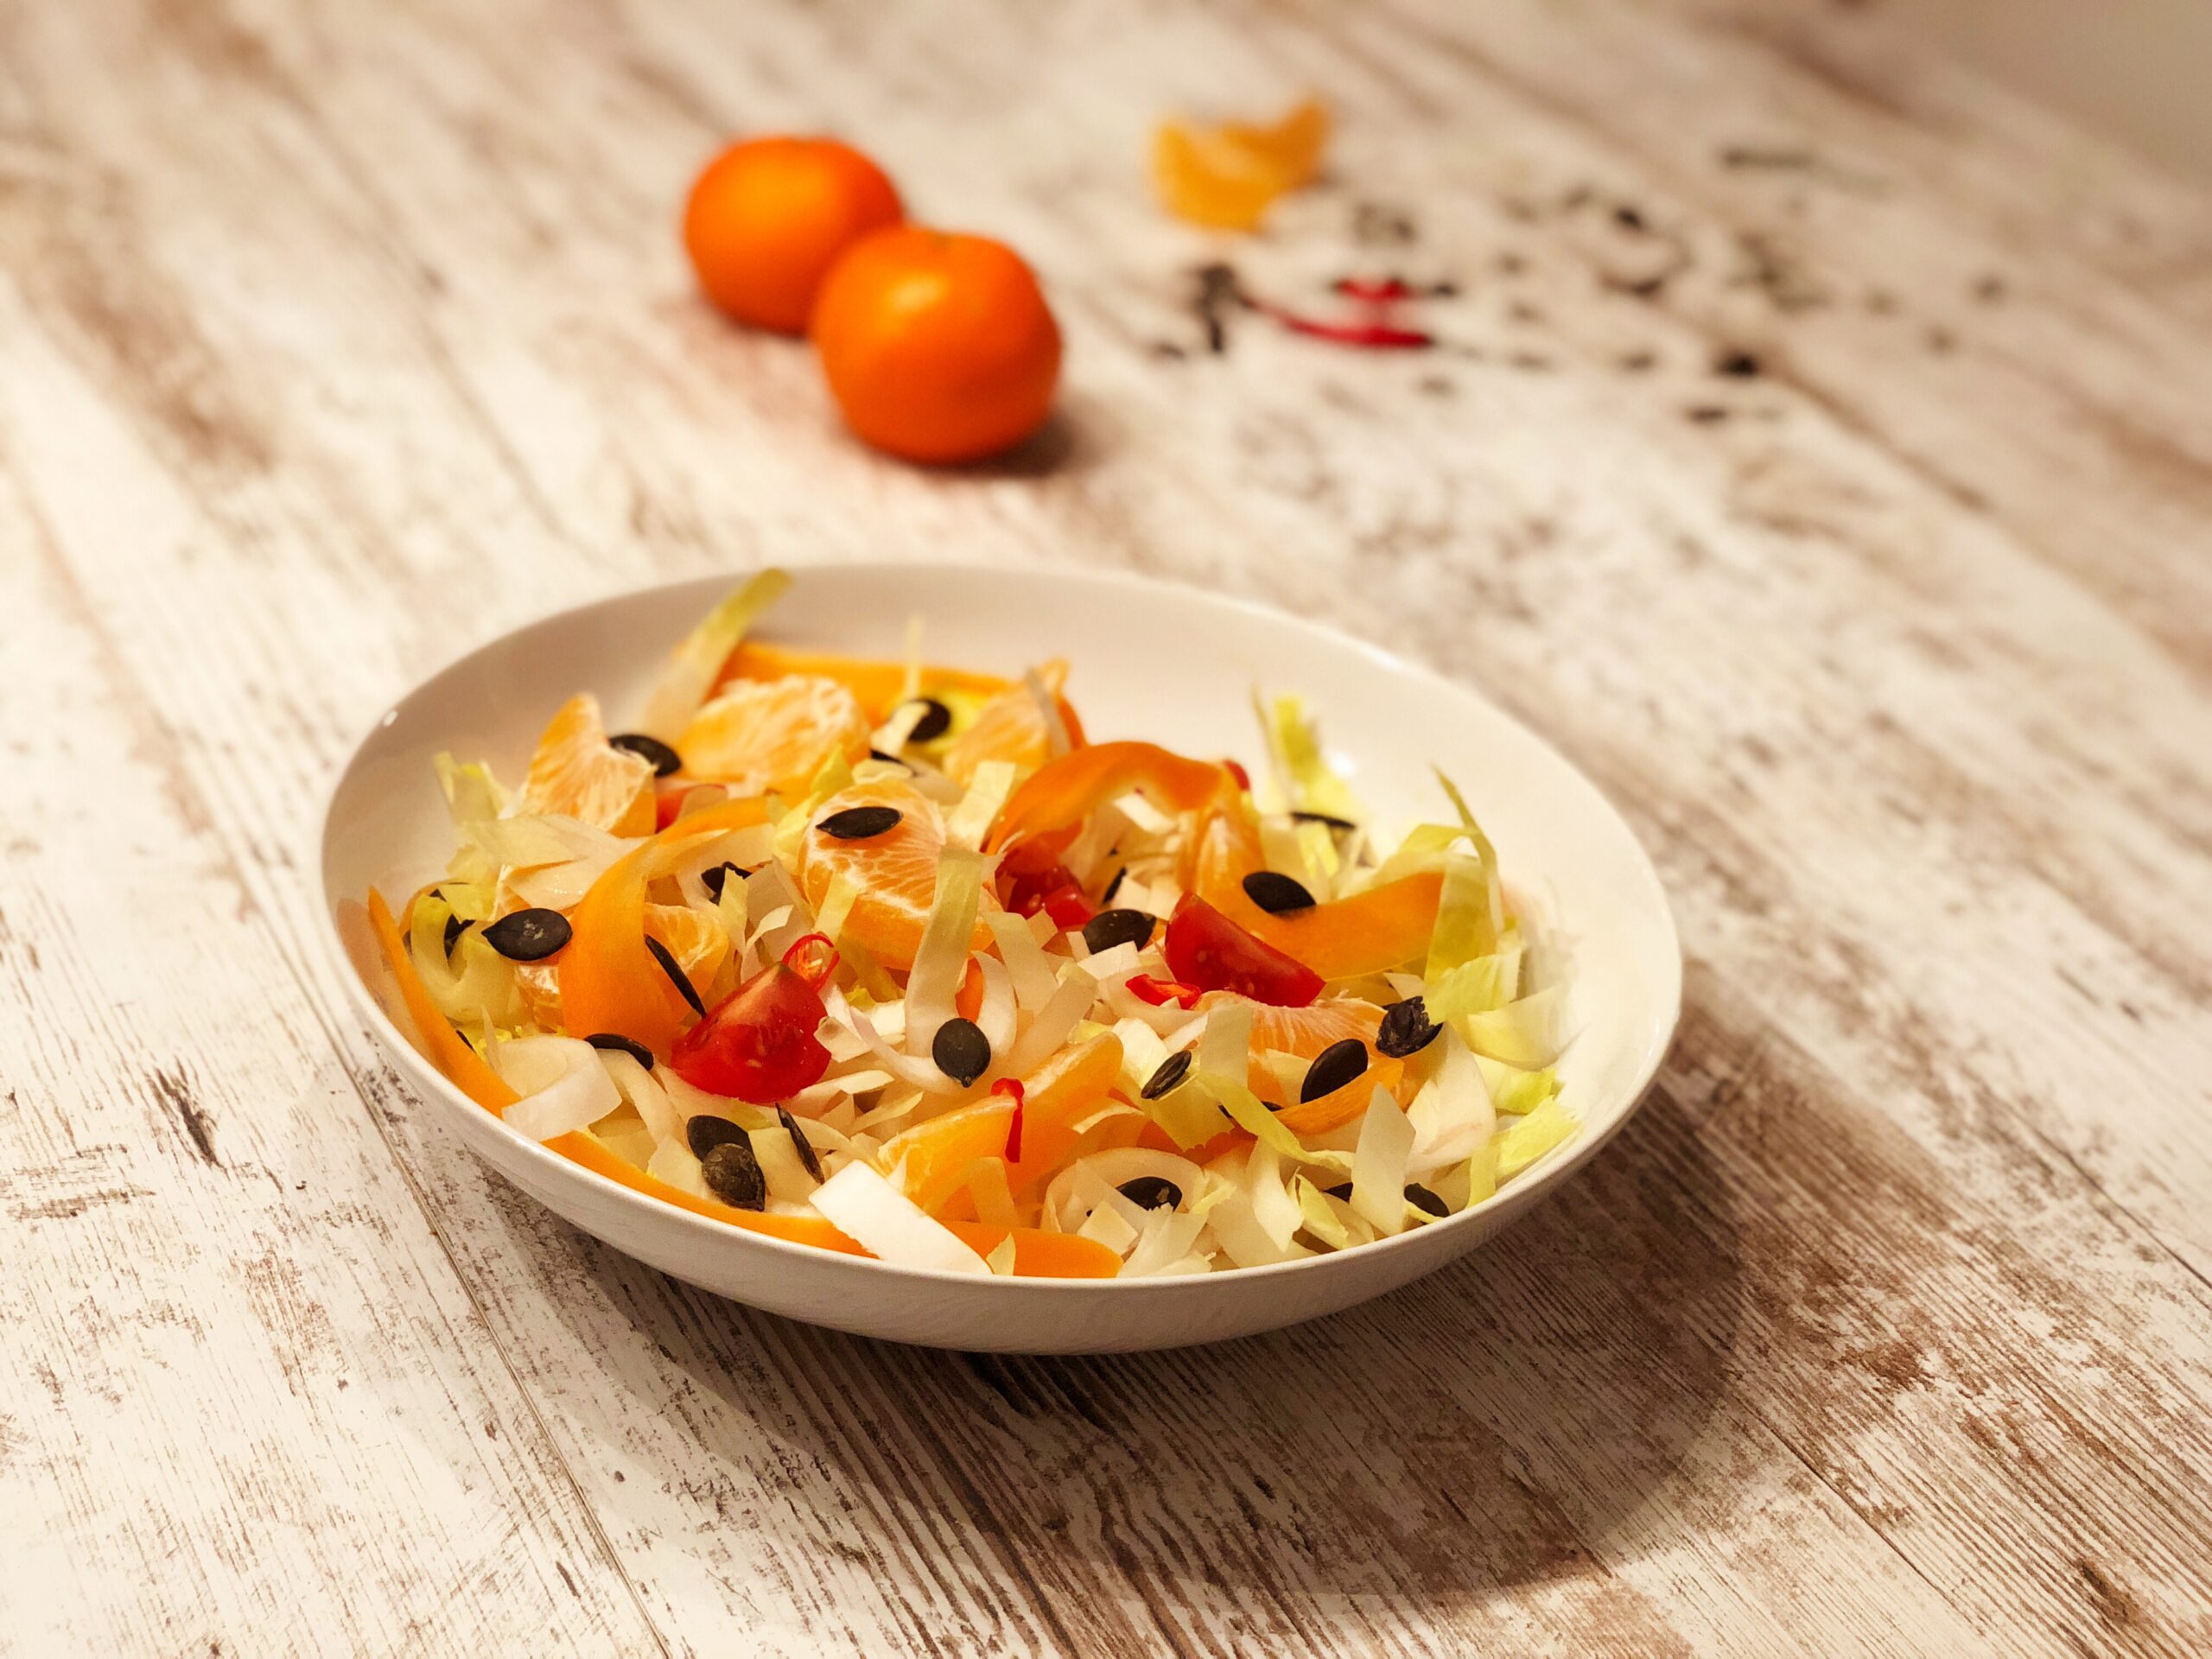 Chicorée-Mandarinen-Salat — Back To Real Lifestyle